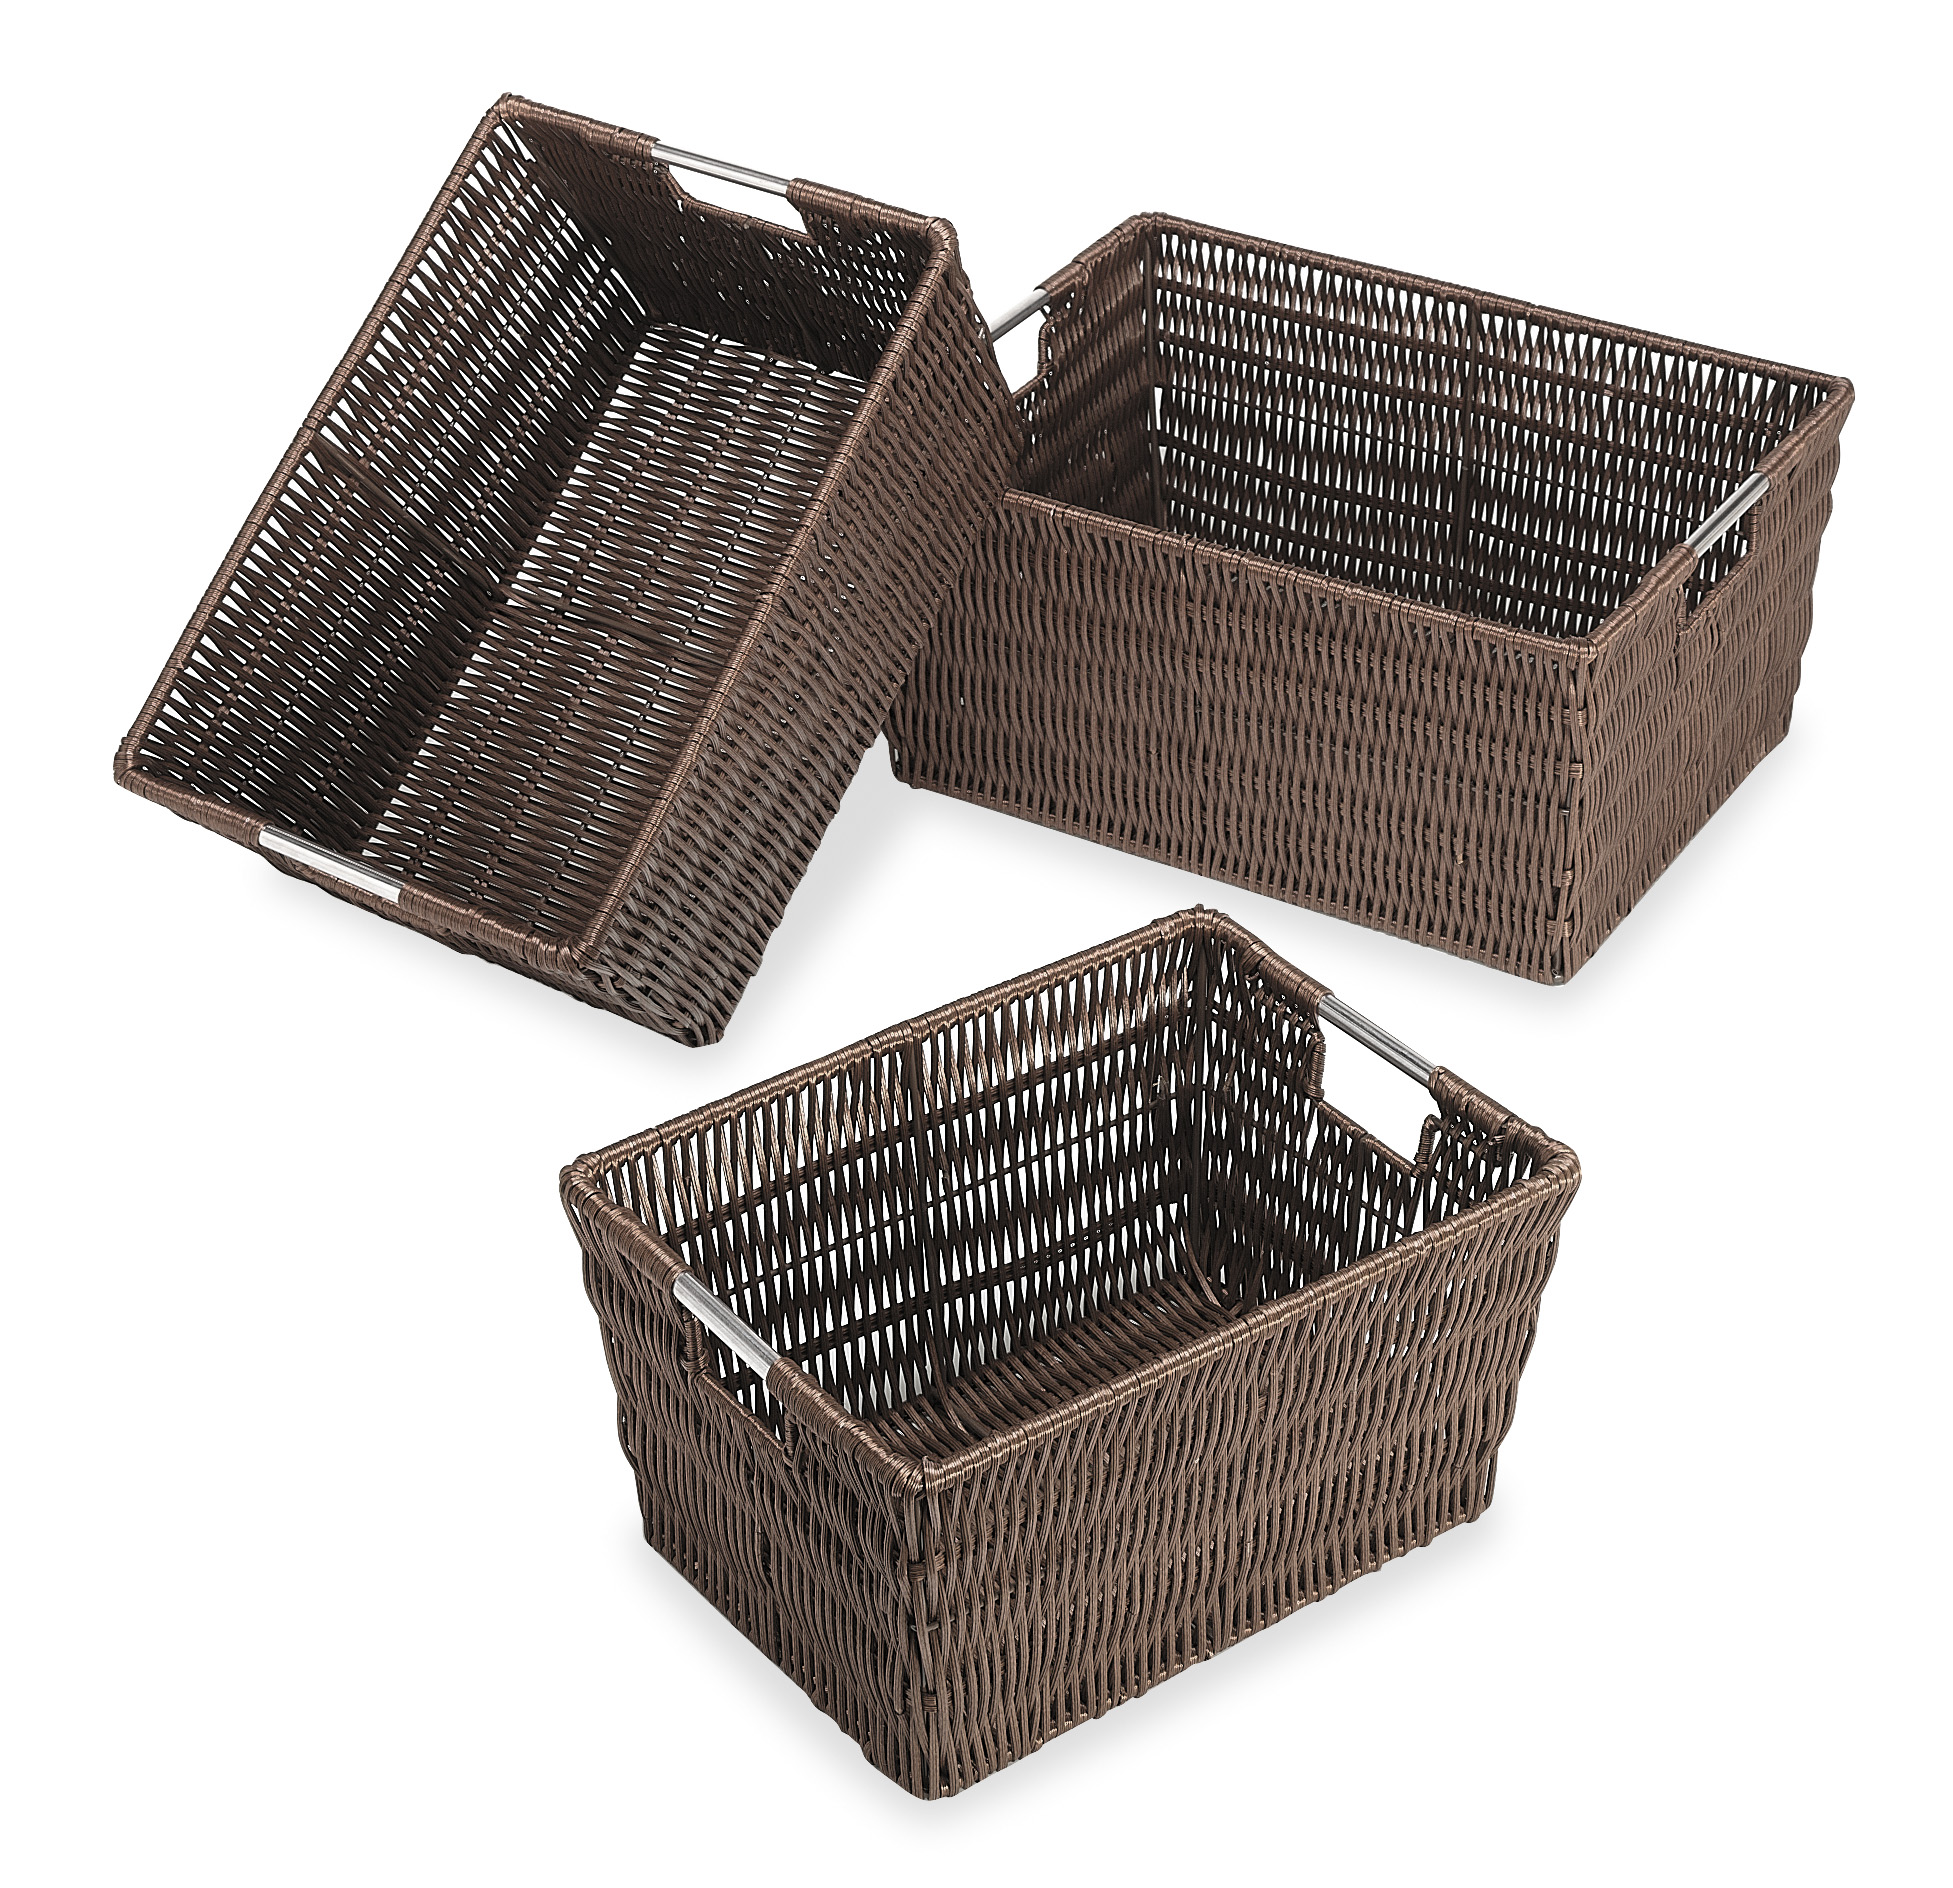 Whitmor Rattique Storage Baskets - Set of 3 - Java - image 1 of 8